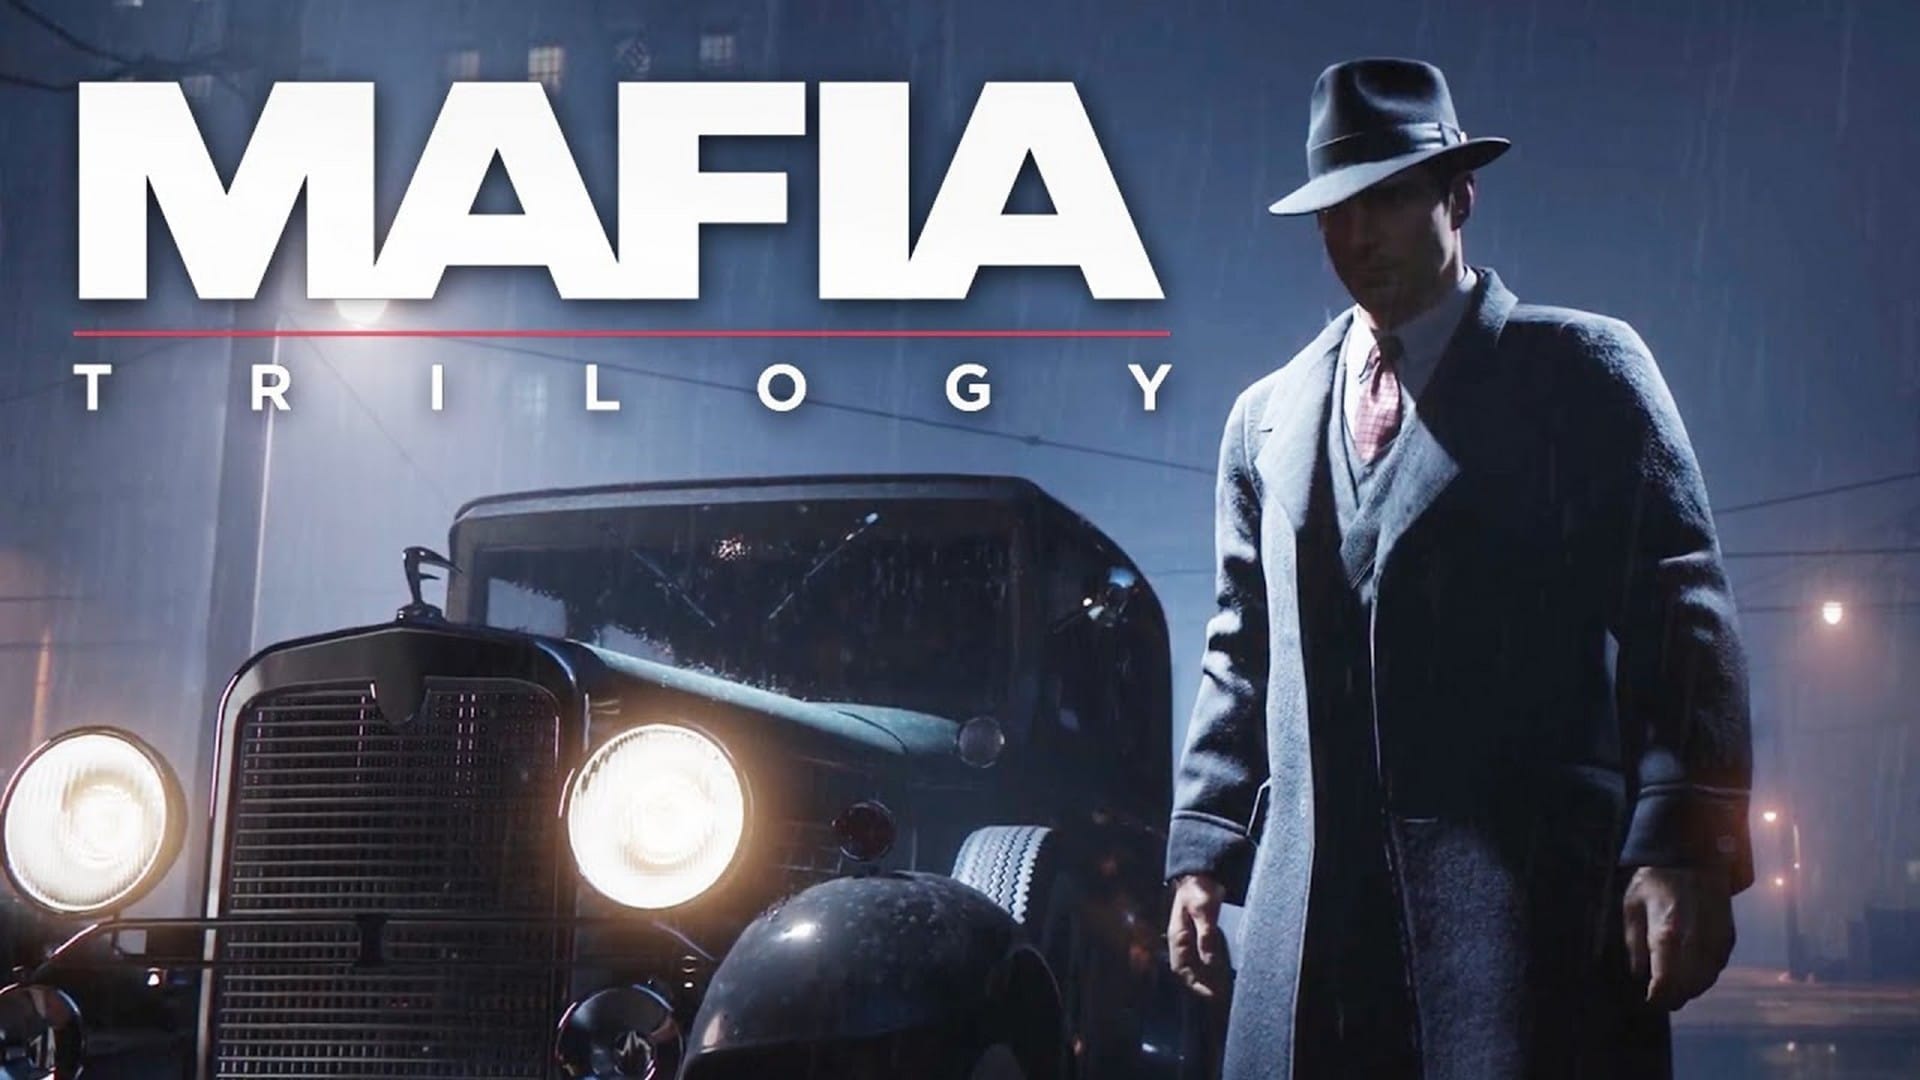 Mafia: Trilogy News